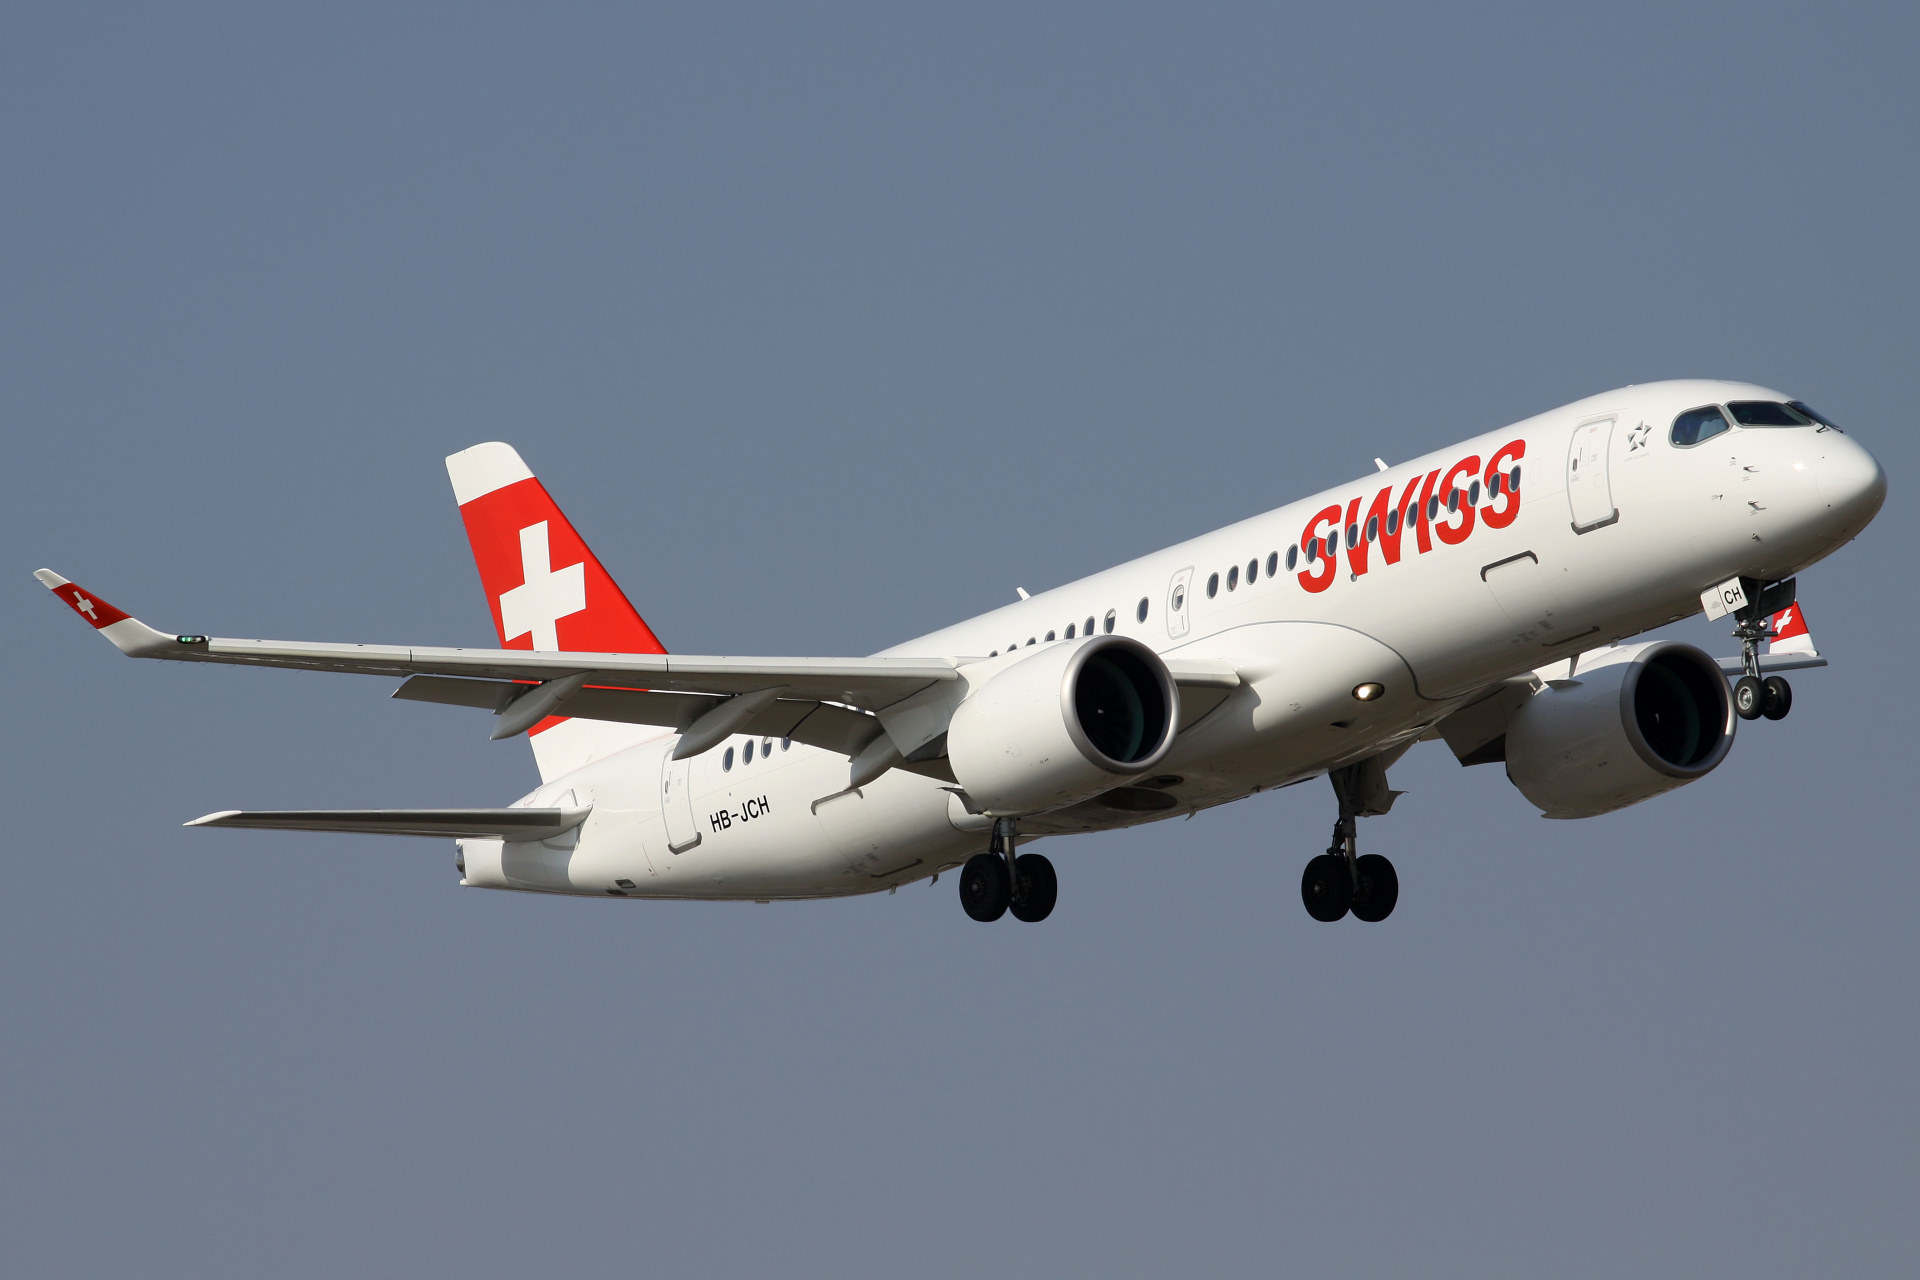 HB-JCH (Aircraft » EPWA Spotting » Airbus A220-300 » Swiss International Air Lines)